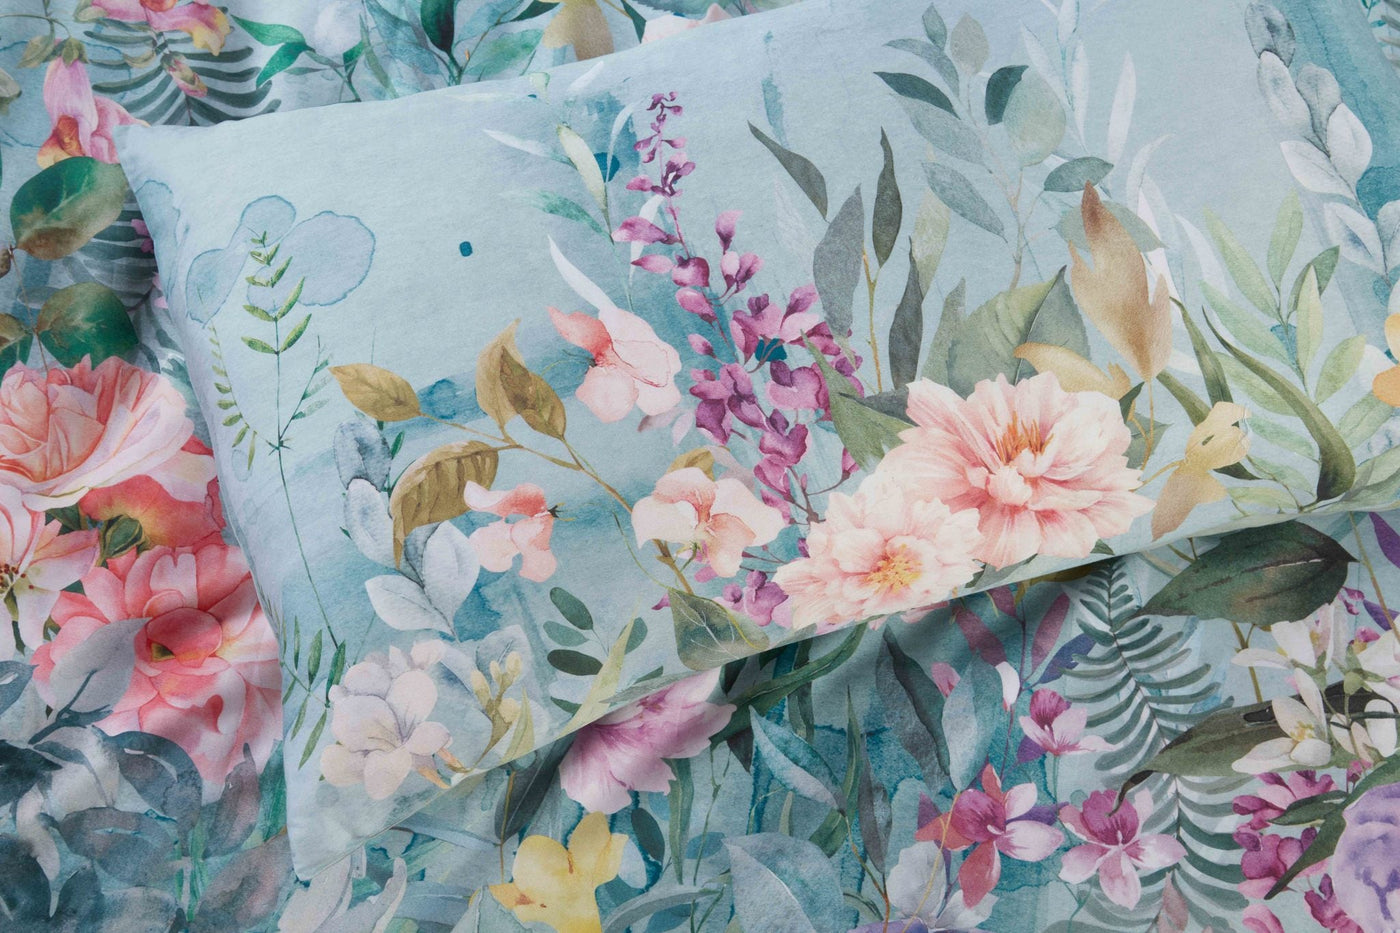 Vantona Enchanted Floral Duvet Cover Set - Multi